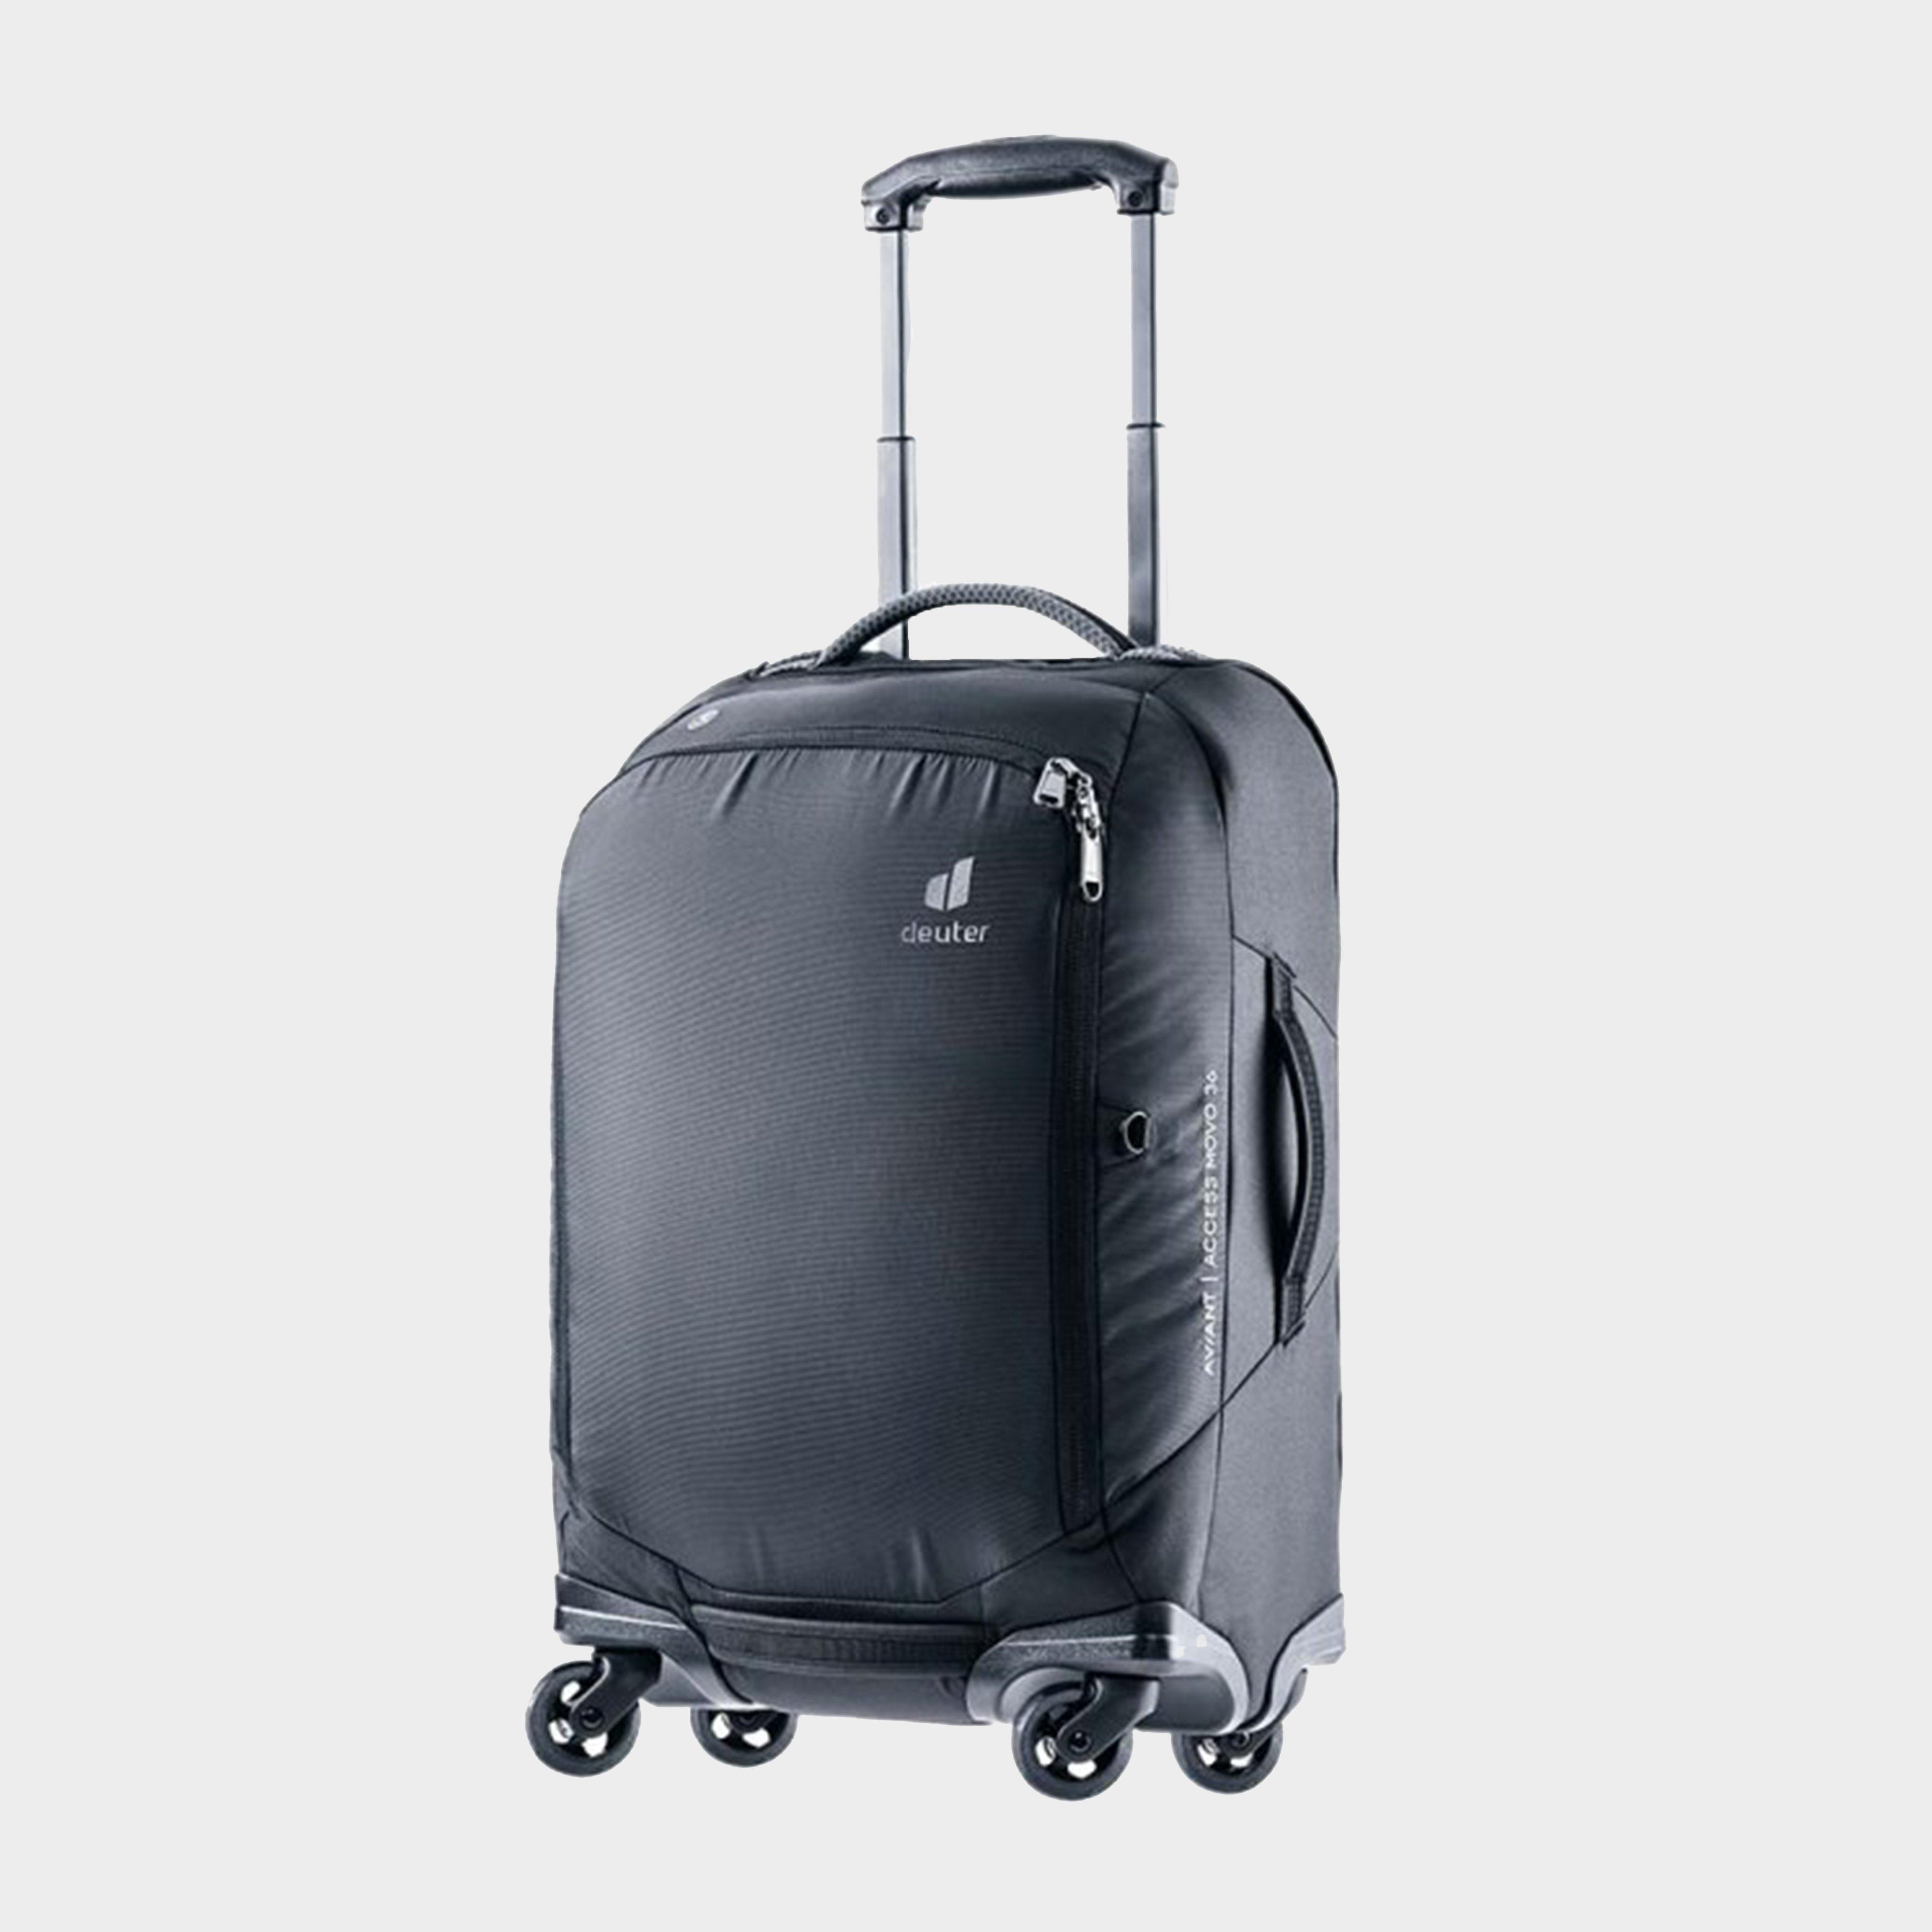 Deuter Aviant Access Movo 36 Wheeled Luggage - Black, Black